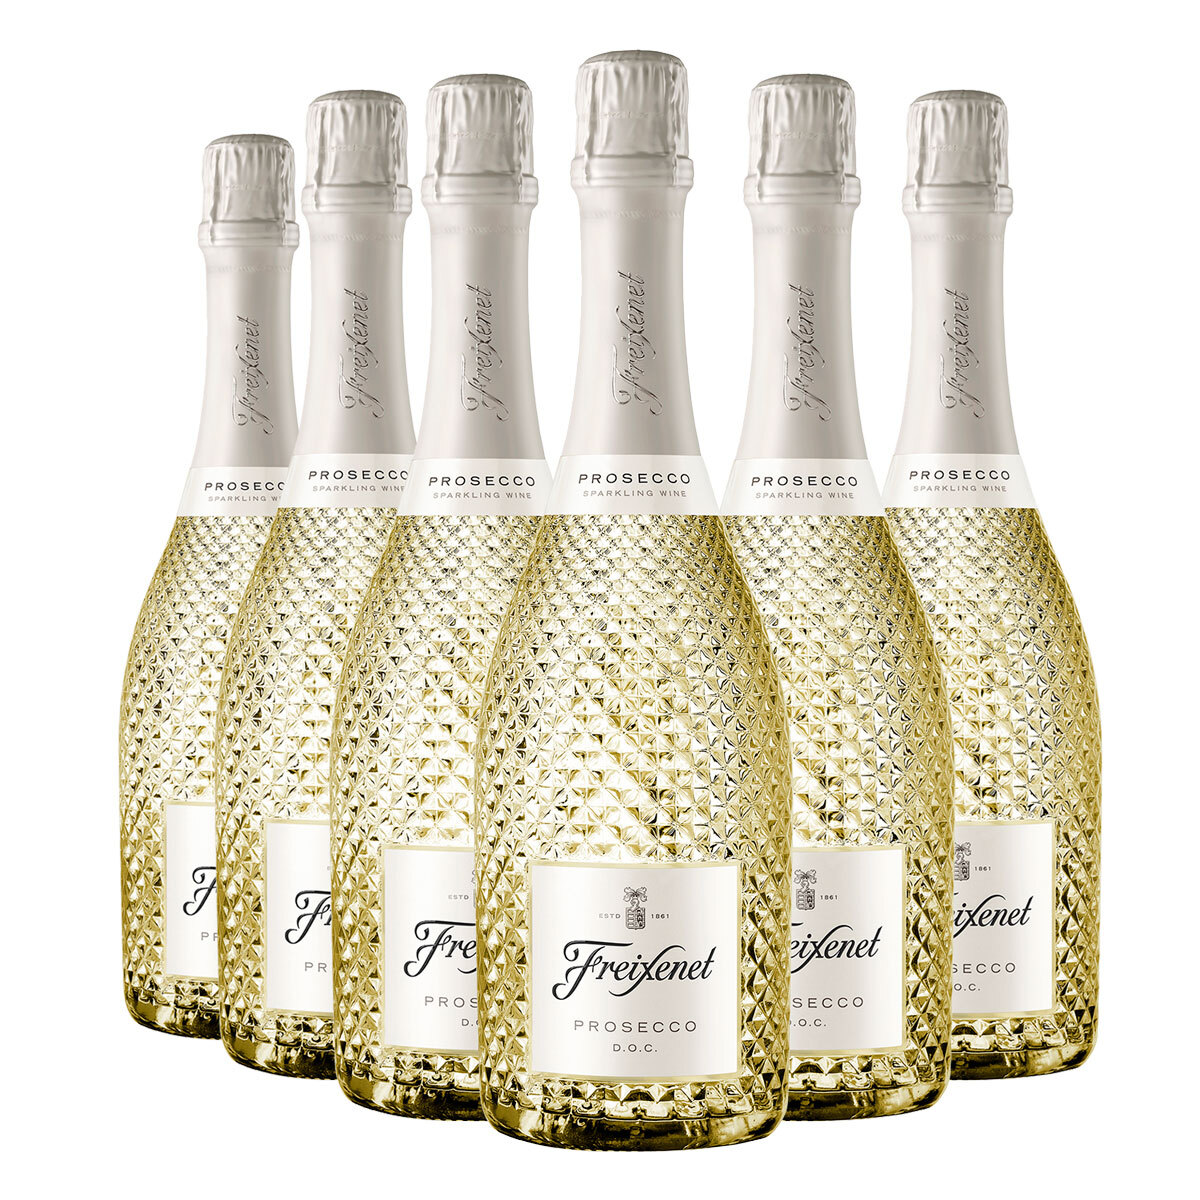 6 bottles of Freixenet Prosecco